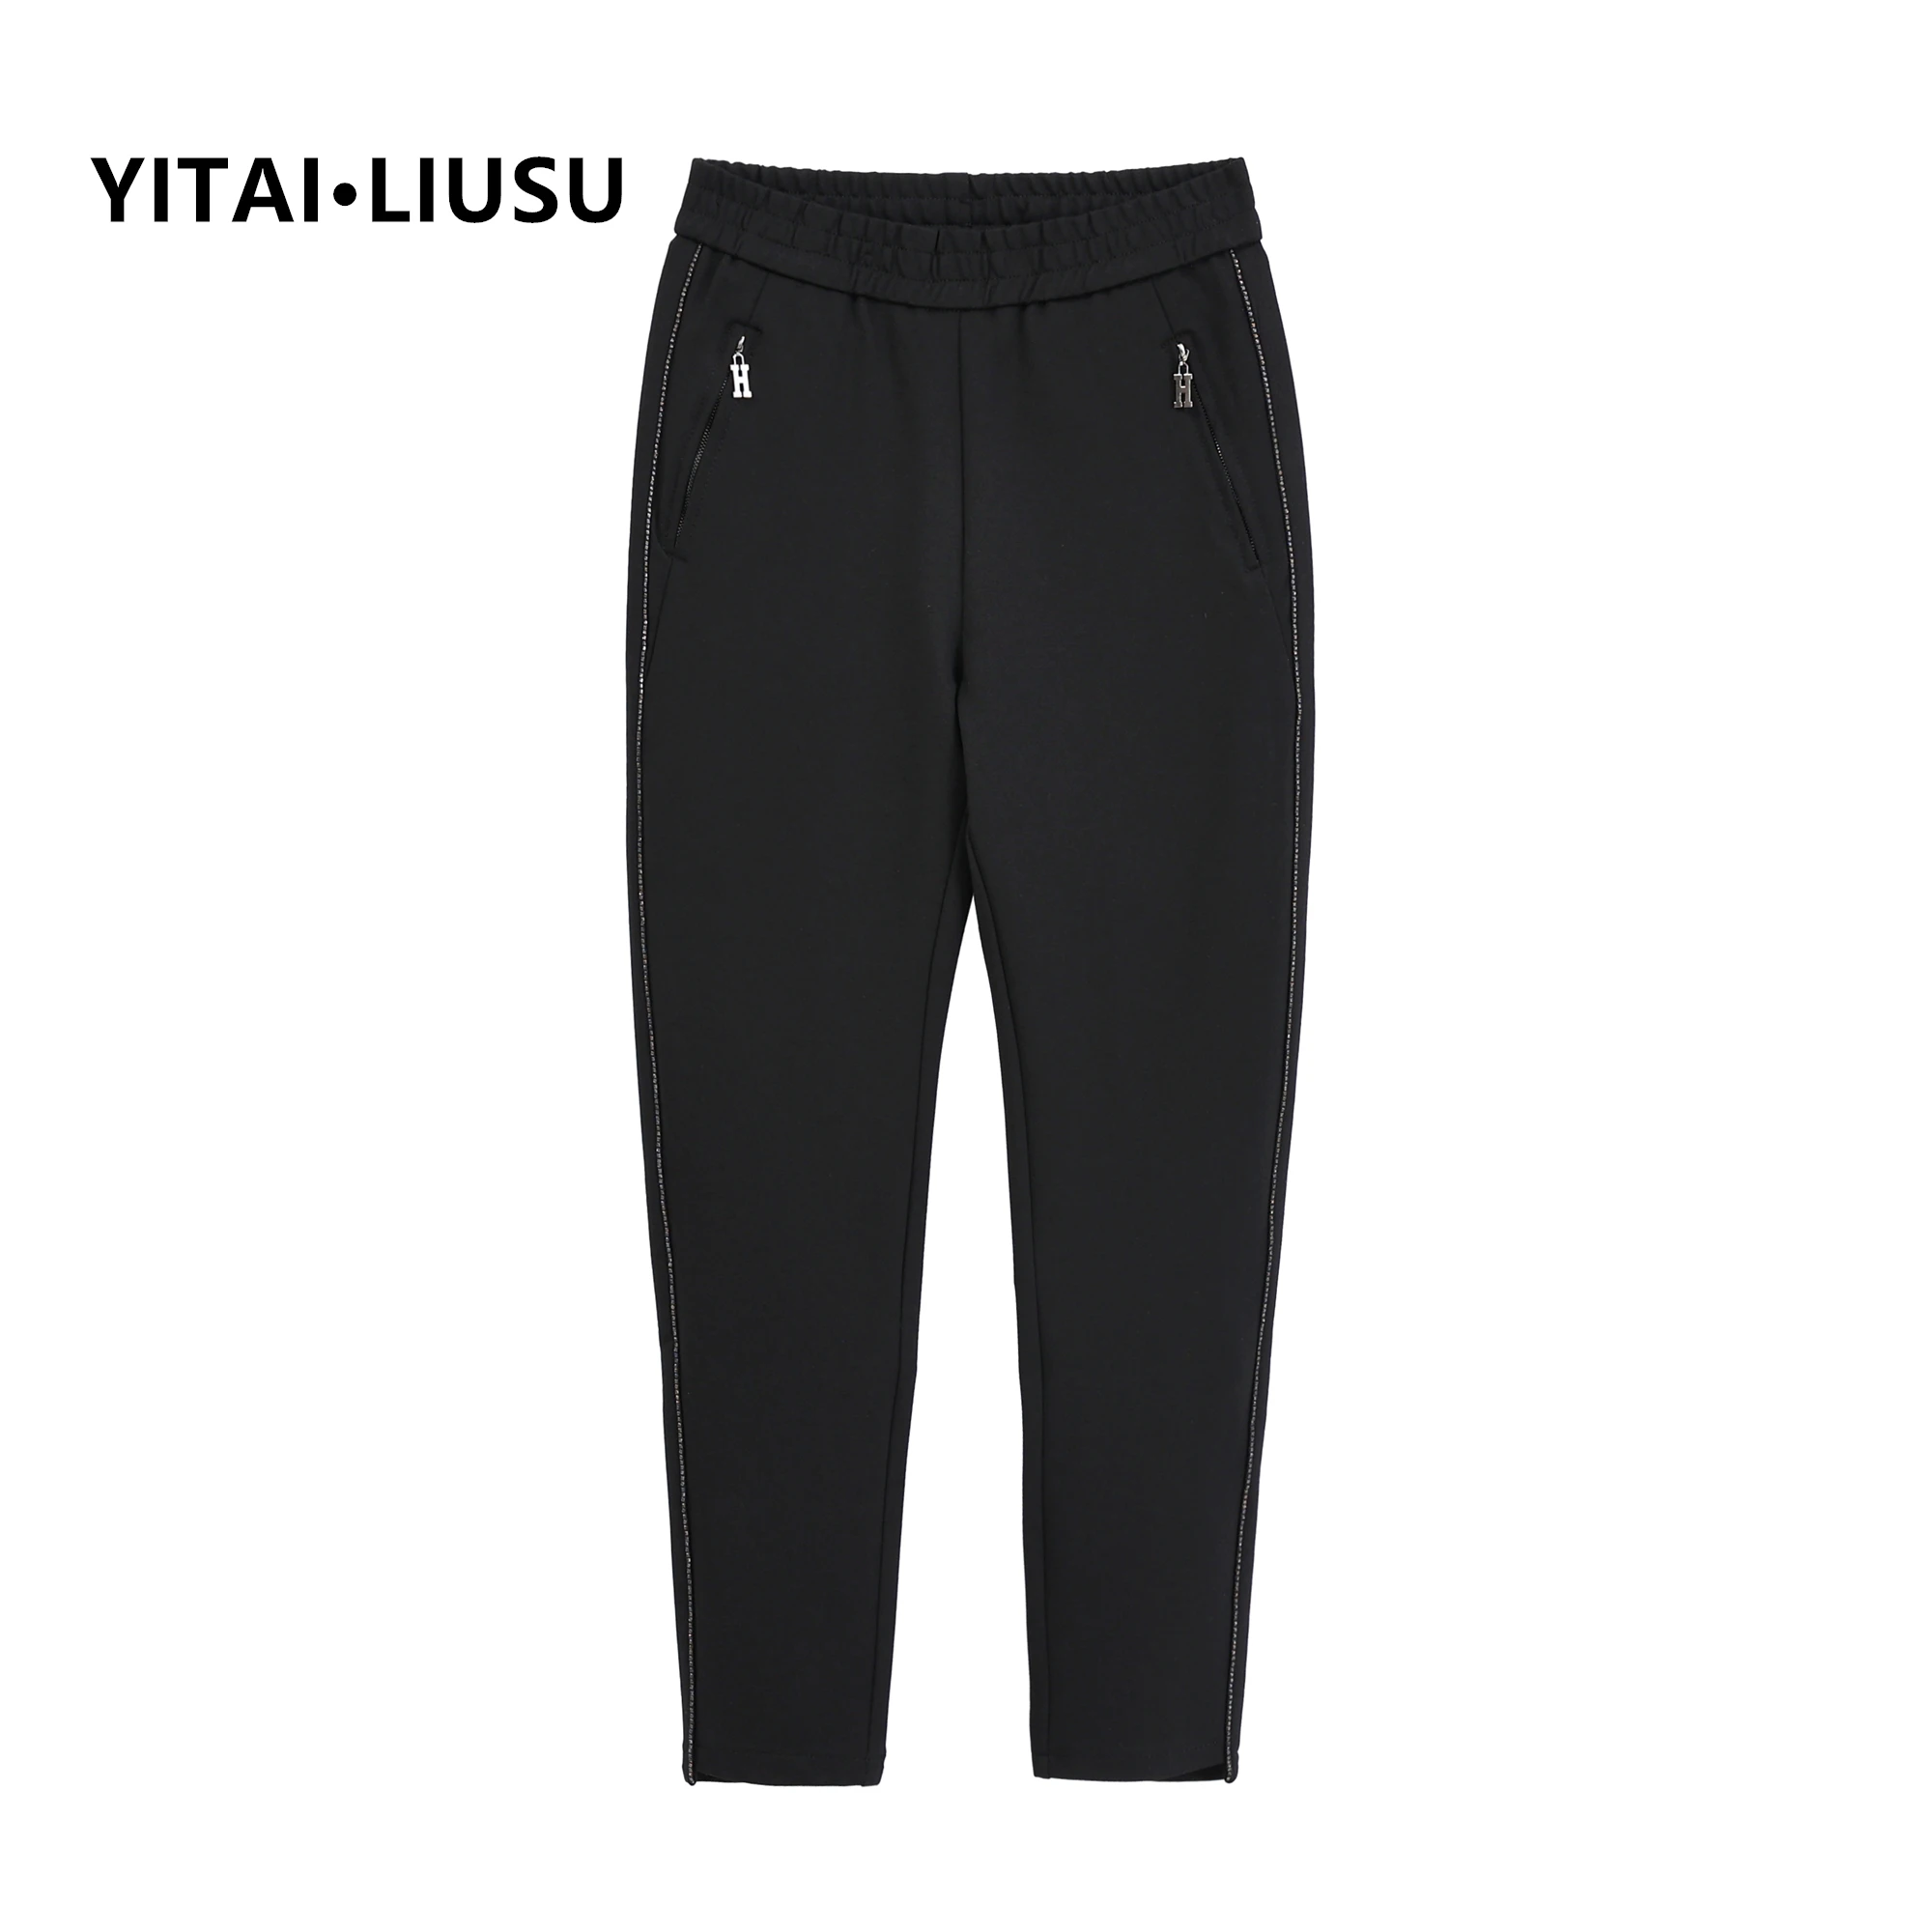 YITAI LIUSU Women's pants classic elastic waistline, side seam stripe, sports and leisure versatile ladies cropped trousers